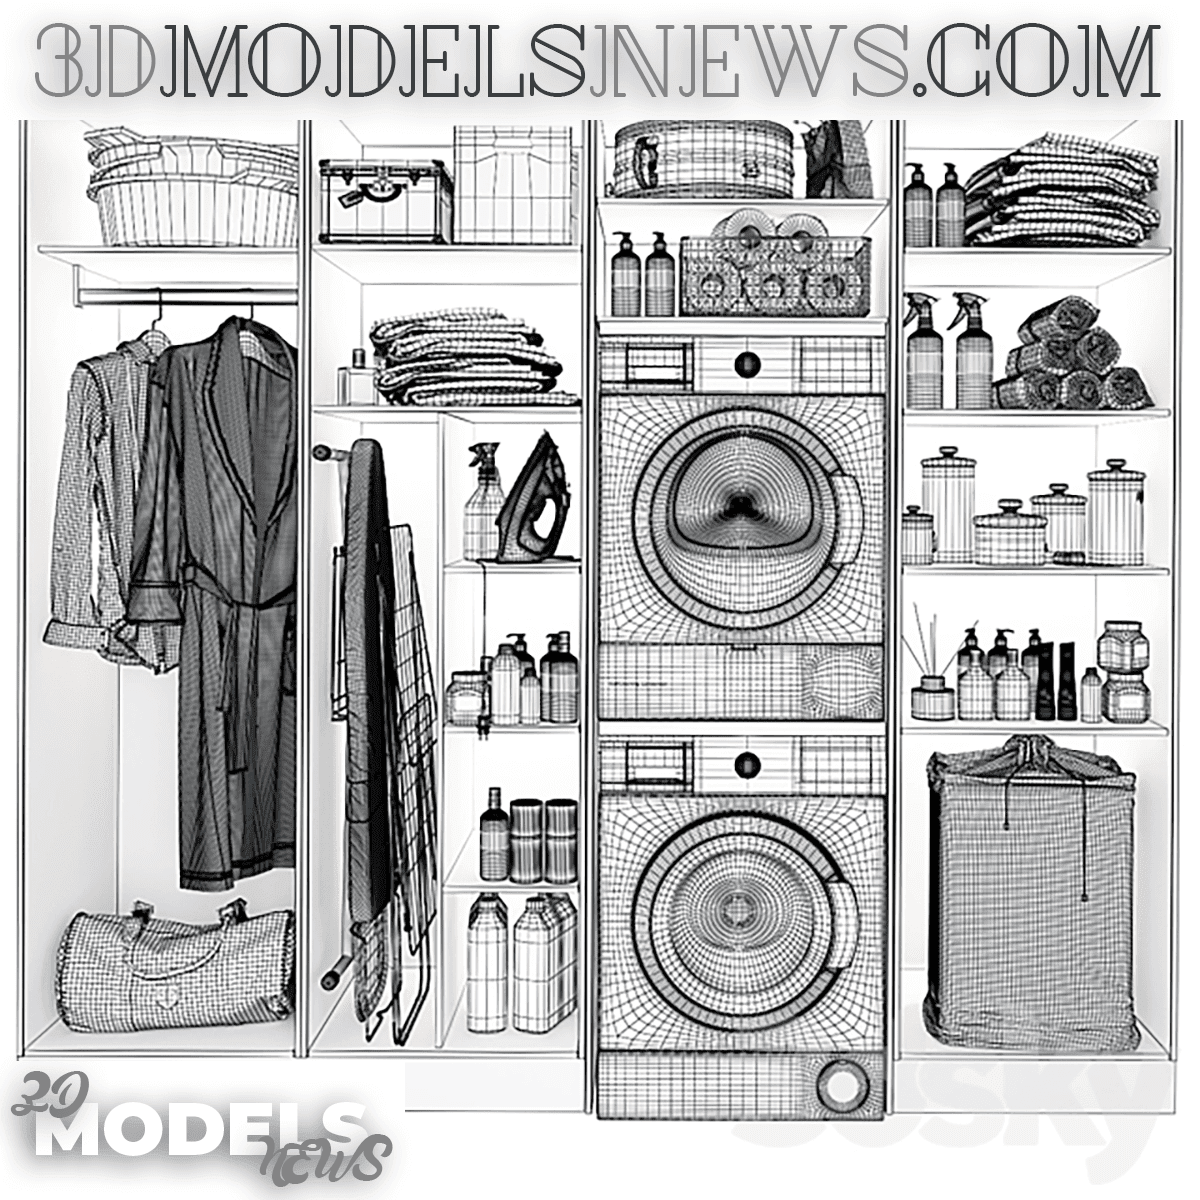 Laundry Room Model 1